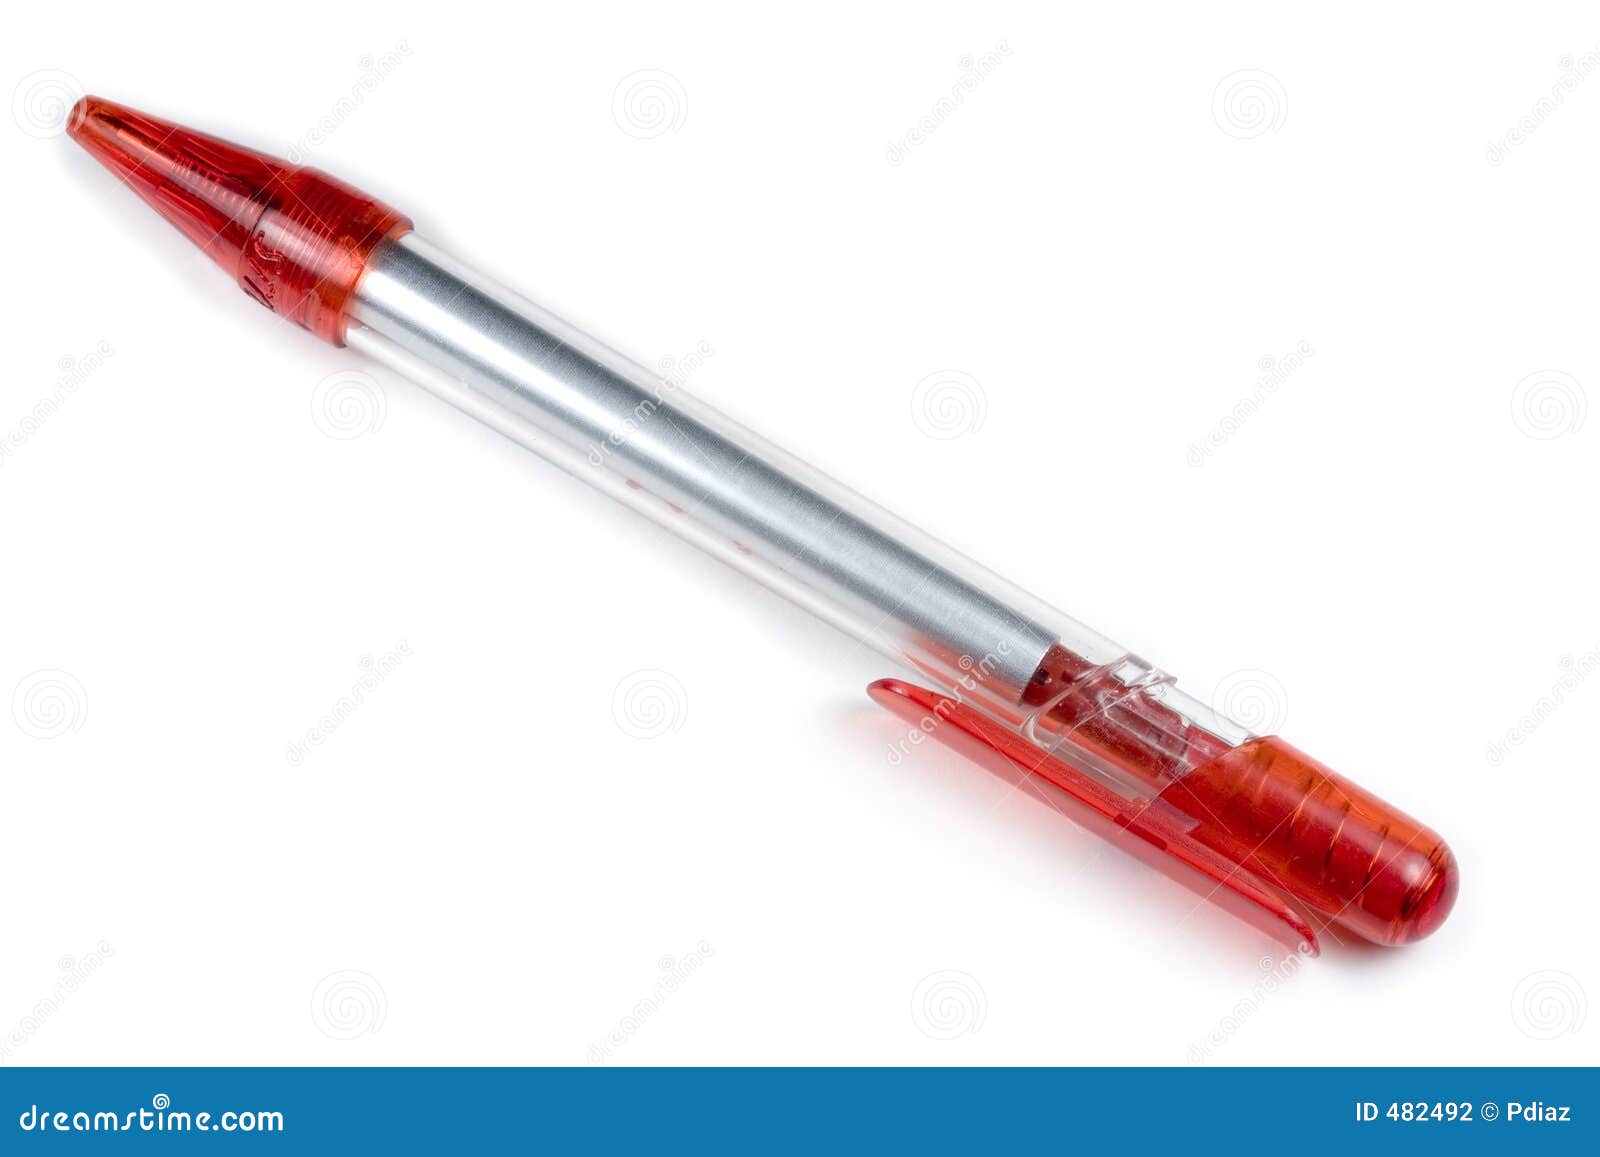 Am the pens red. Правило красной ручки.